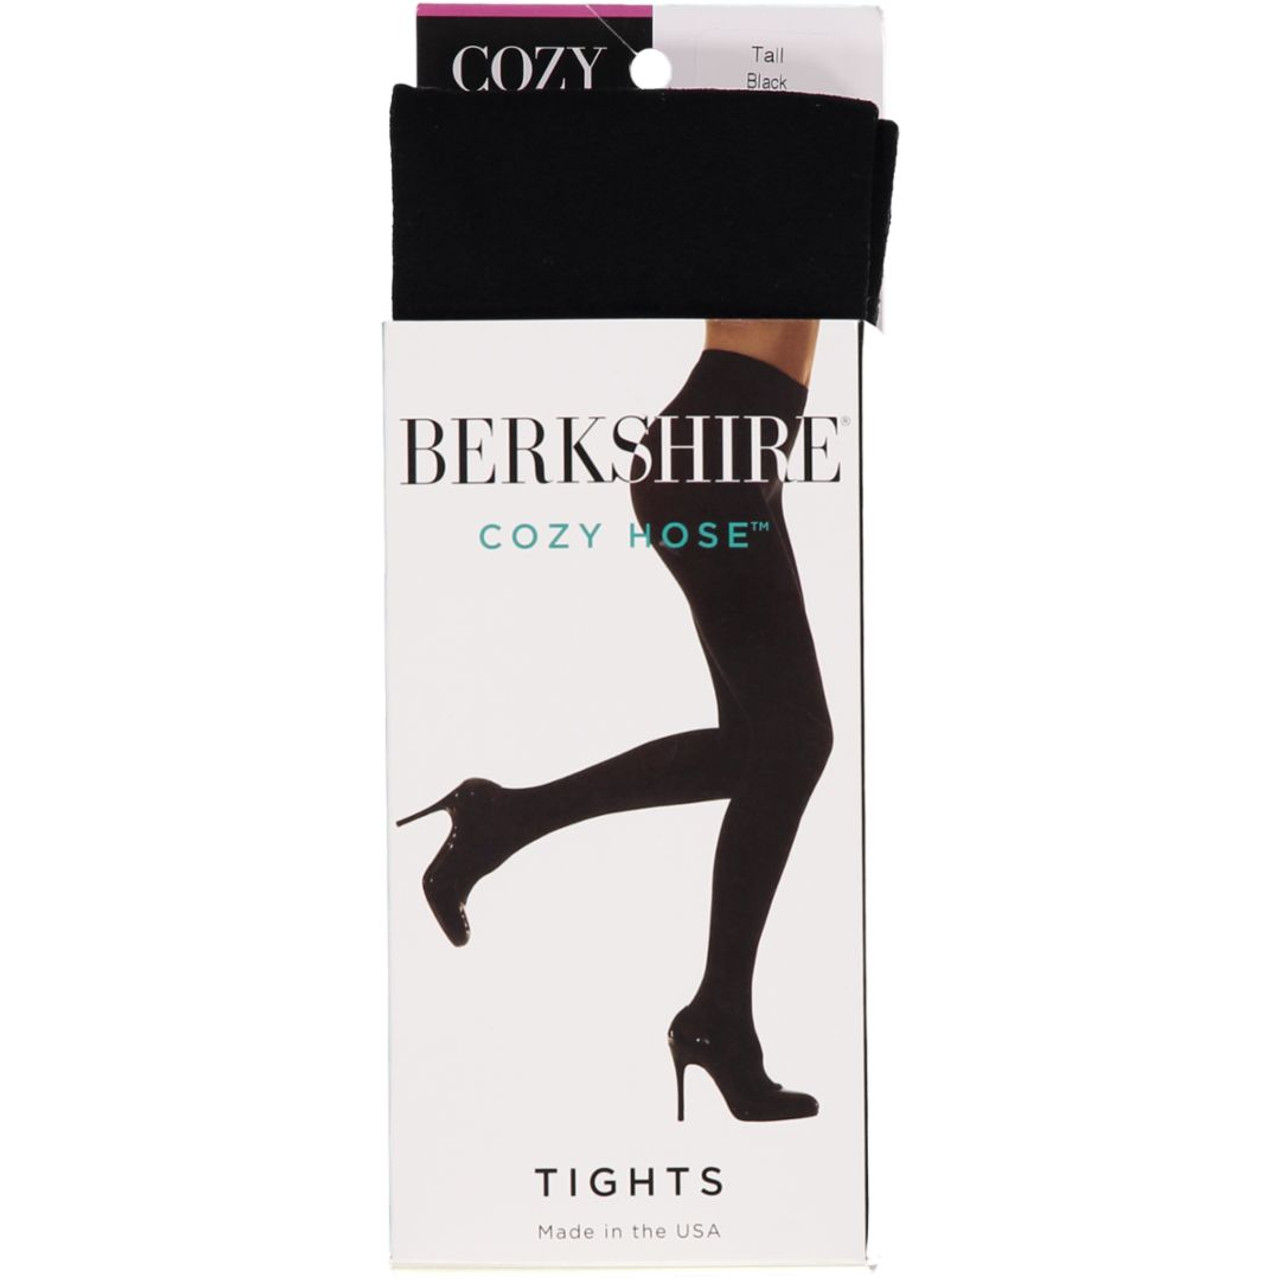 Berkshire Women's Cozy Tight with Fleece Lined Leg, Black, Medium